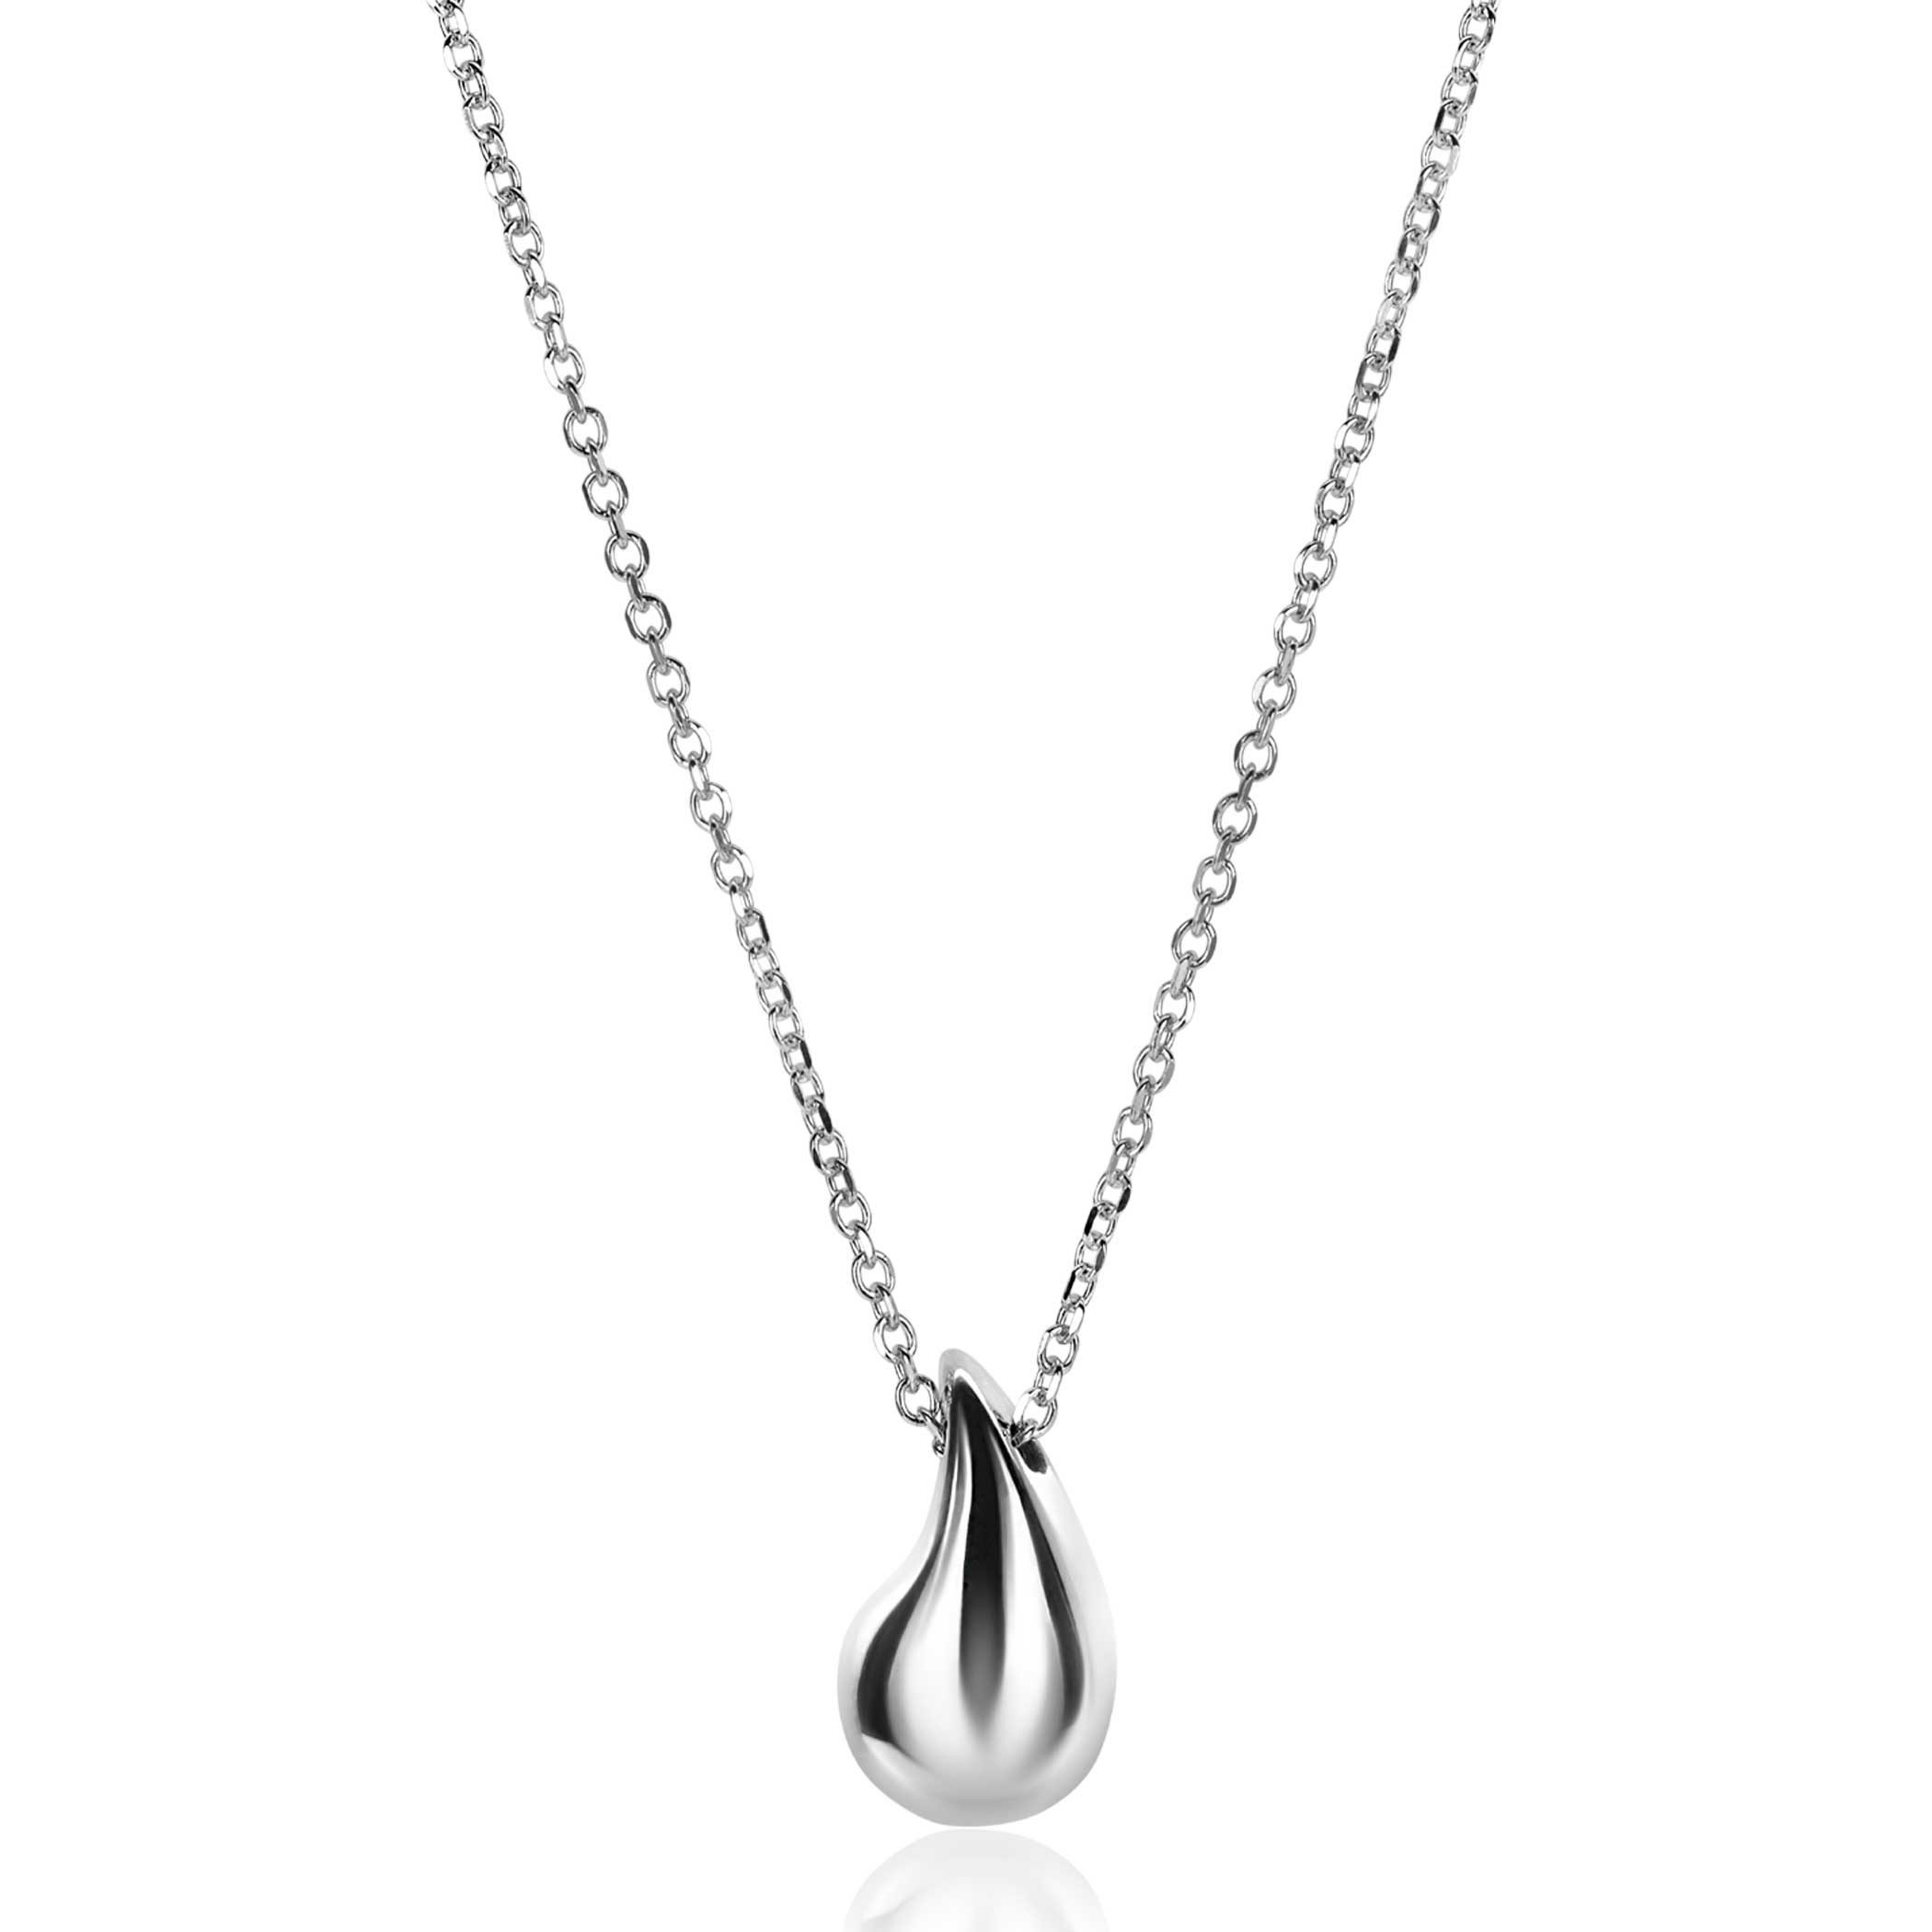 ZINZI silver jasseron necklace 42-45cm with organically shaped pendant 18mm ZIC2636